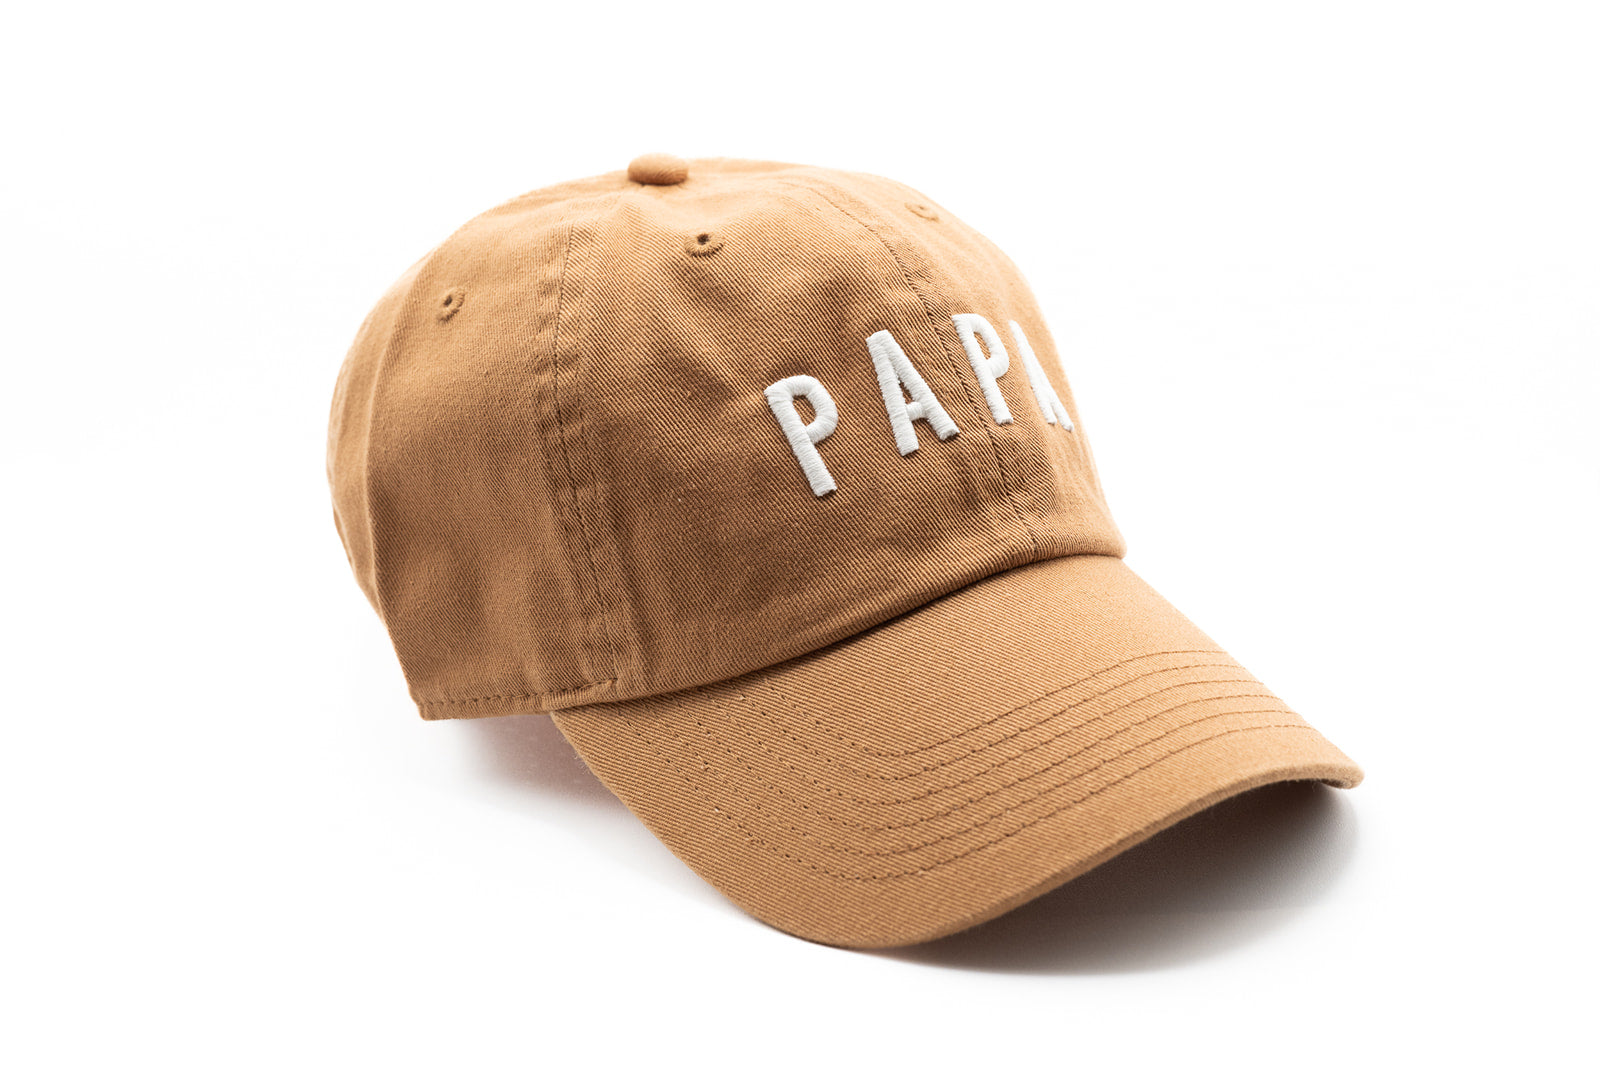 Terra Cotta Papa Hat